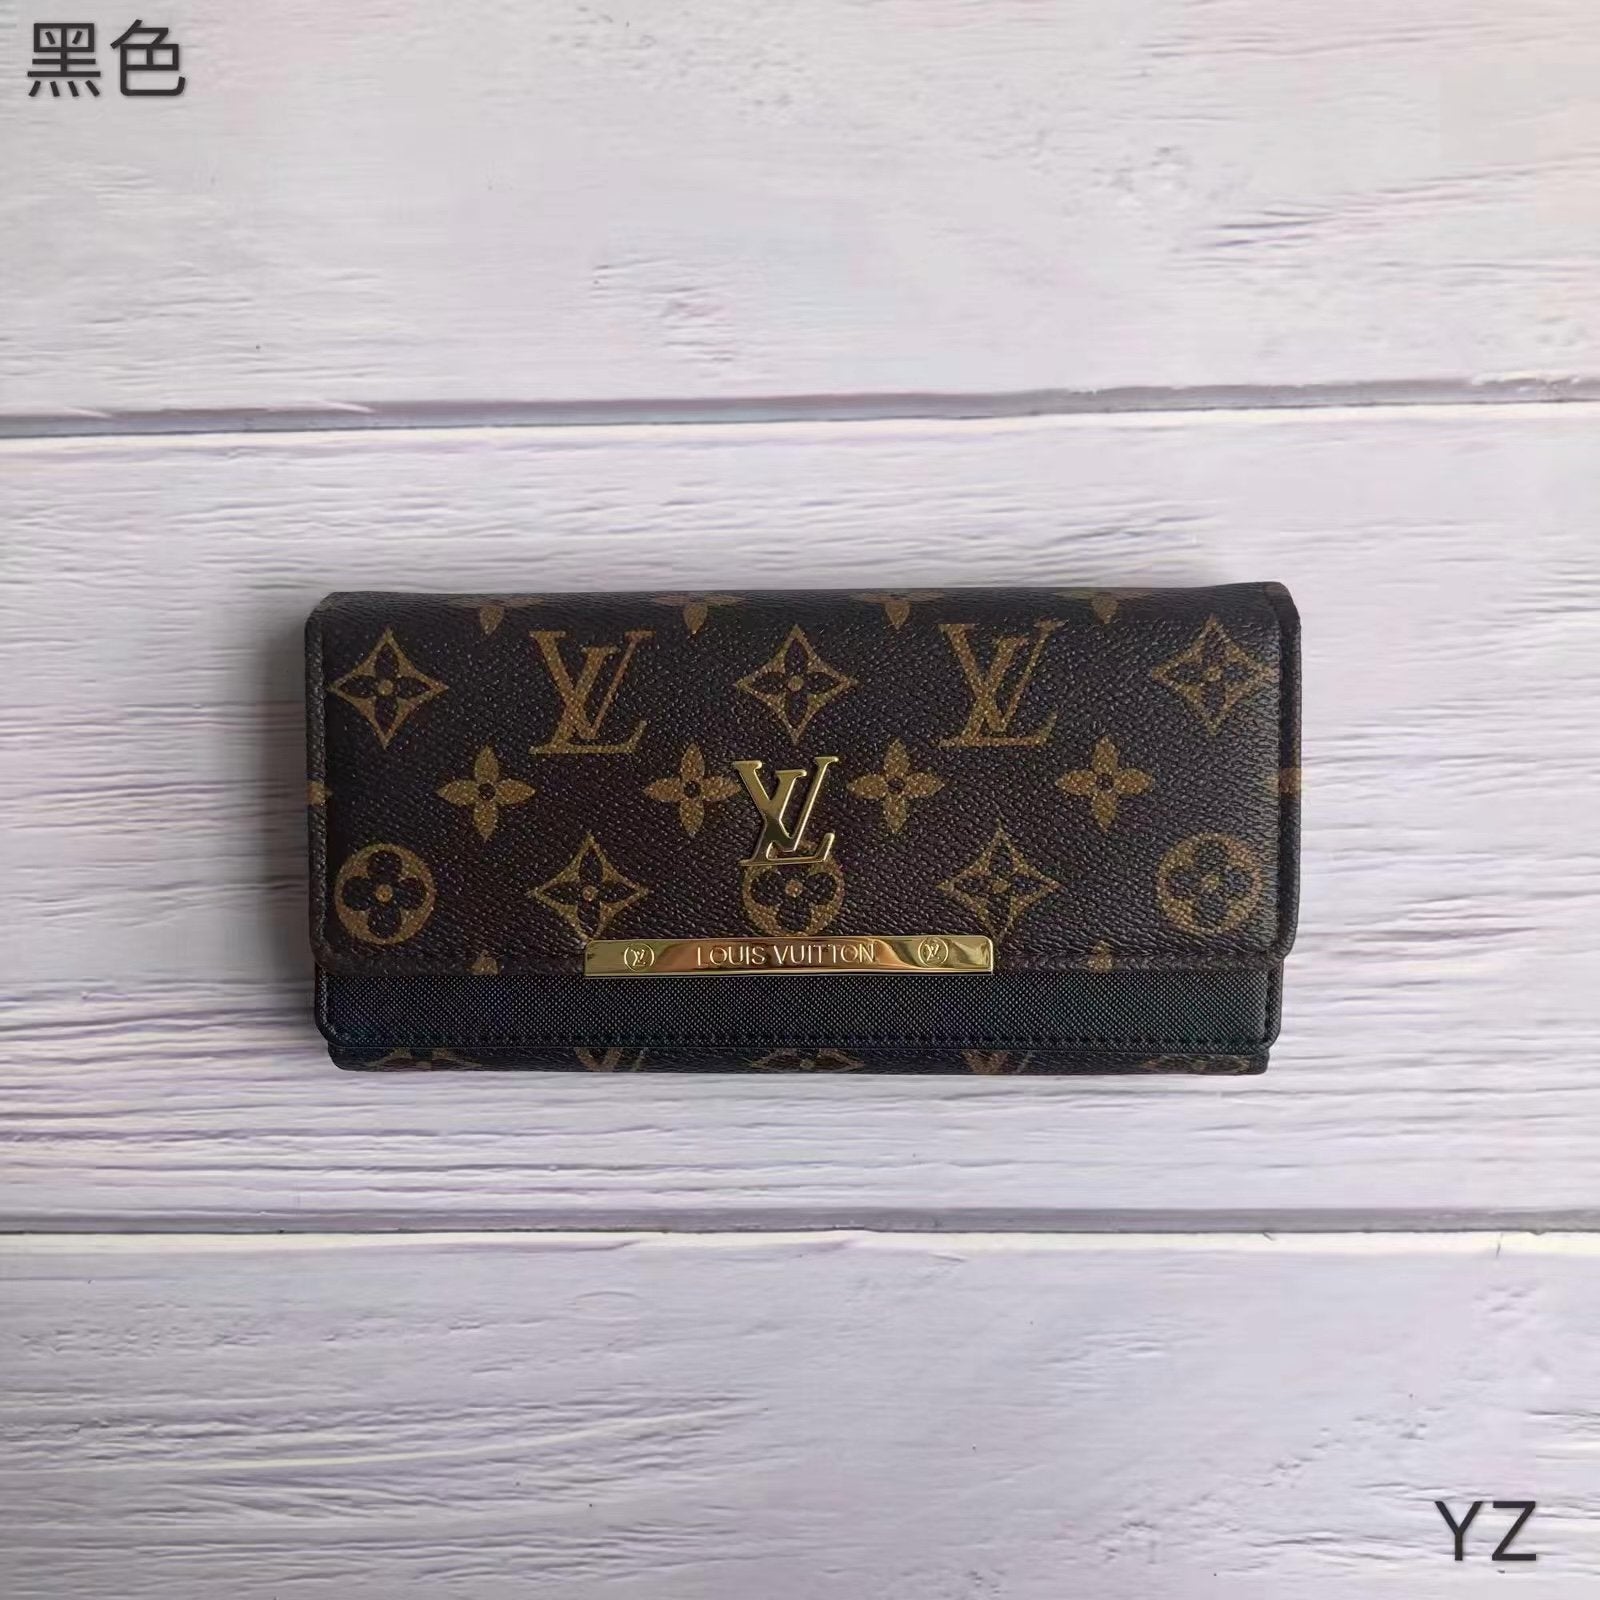 LV Louis Vuitton fashion cheap discount wallet Women handbag zer